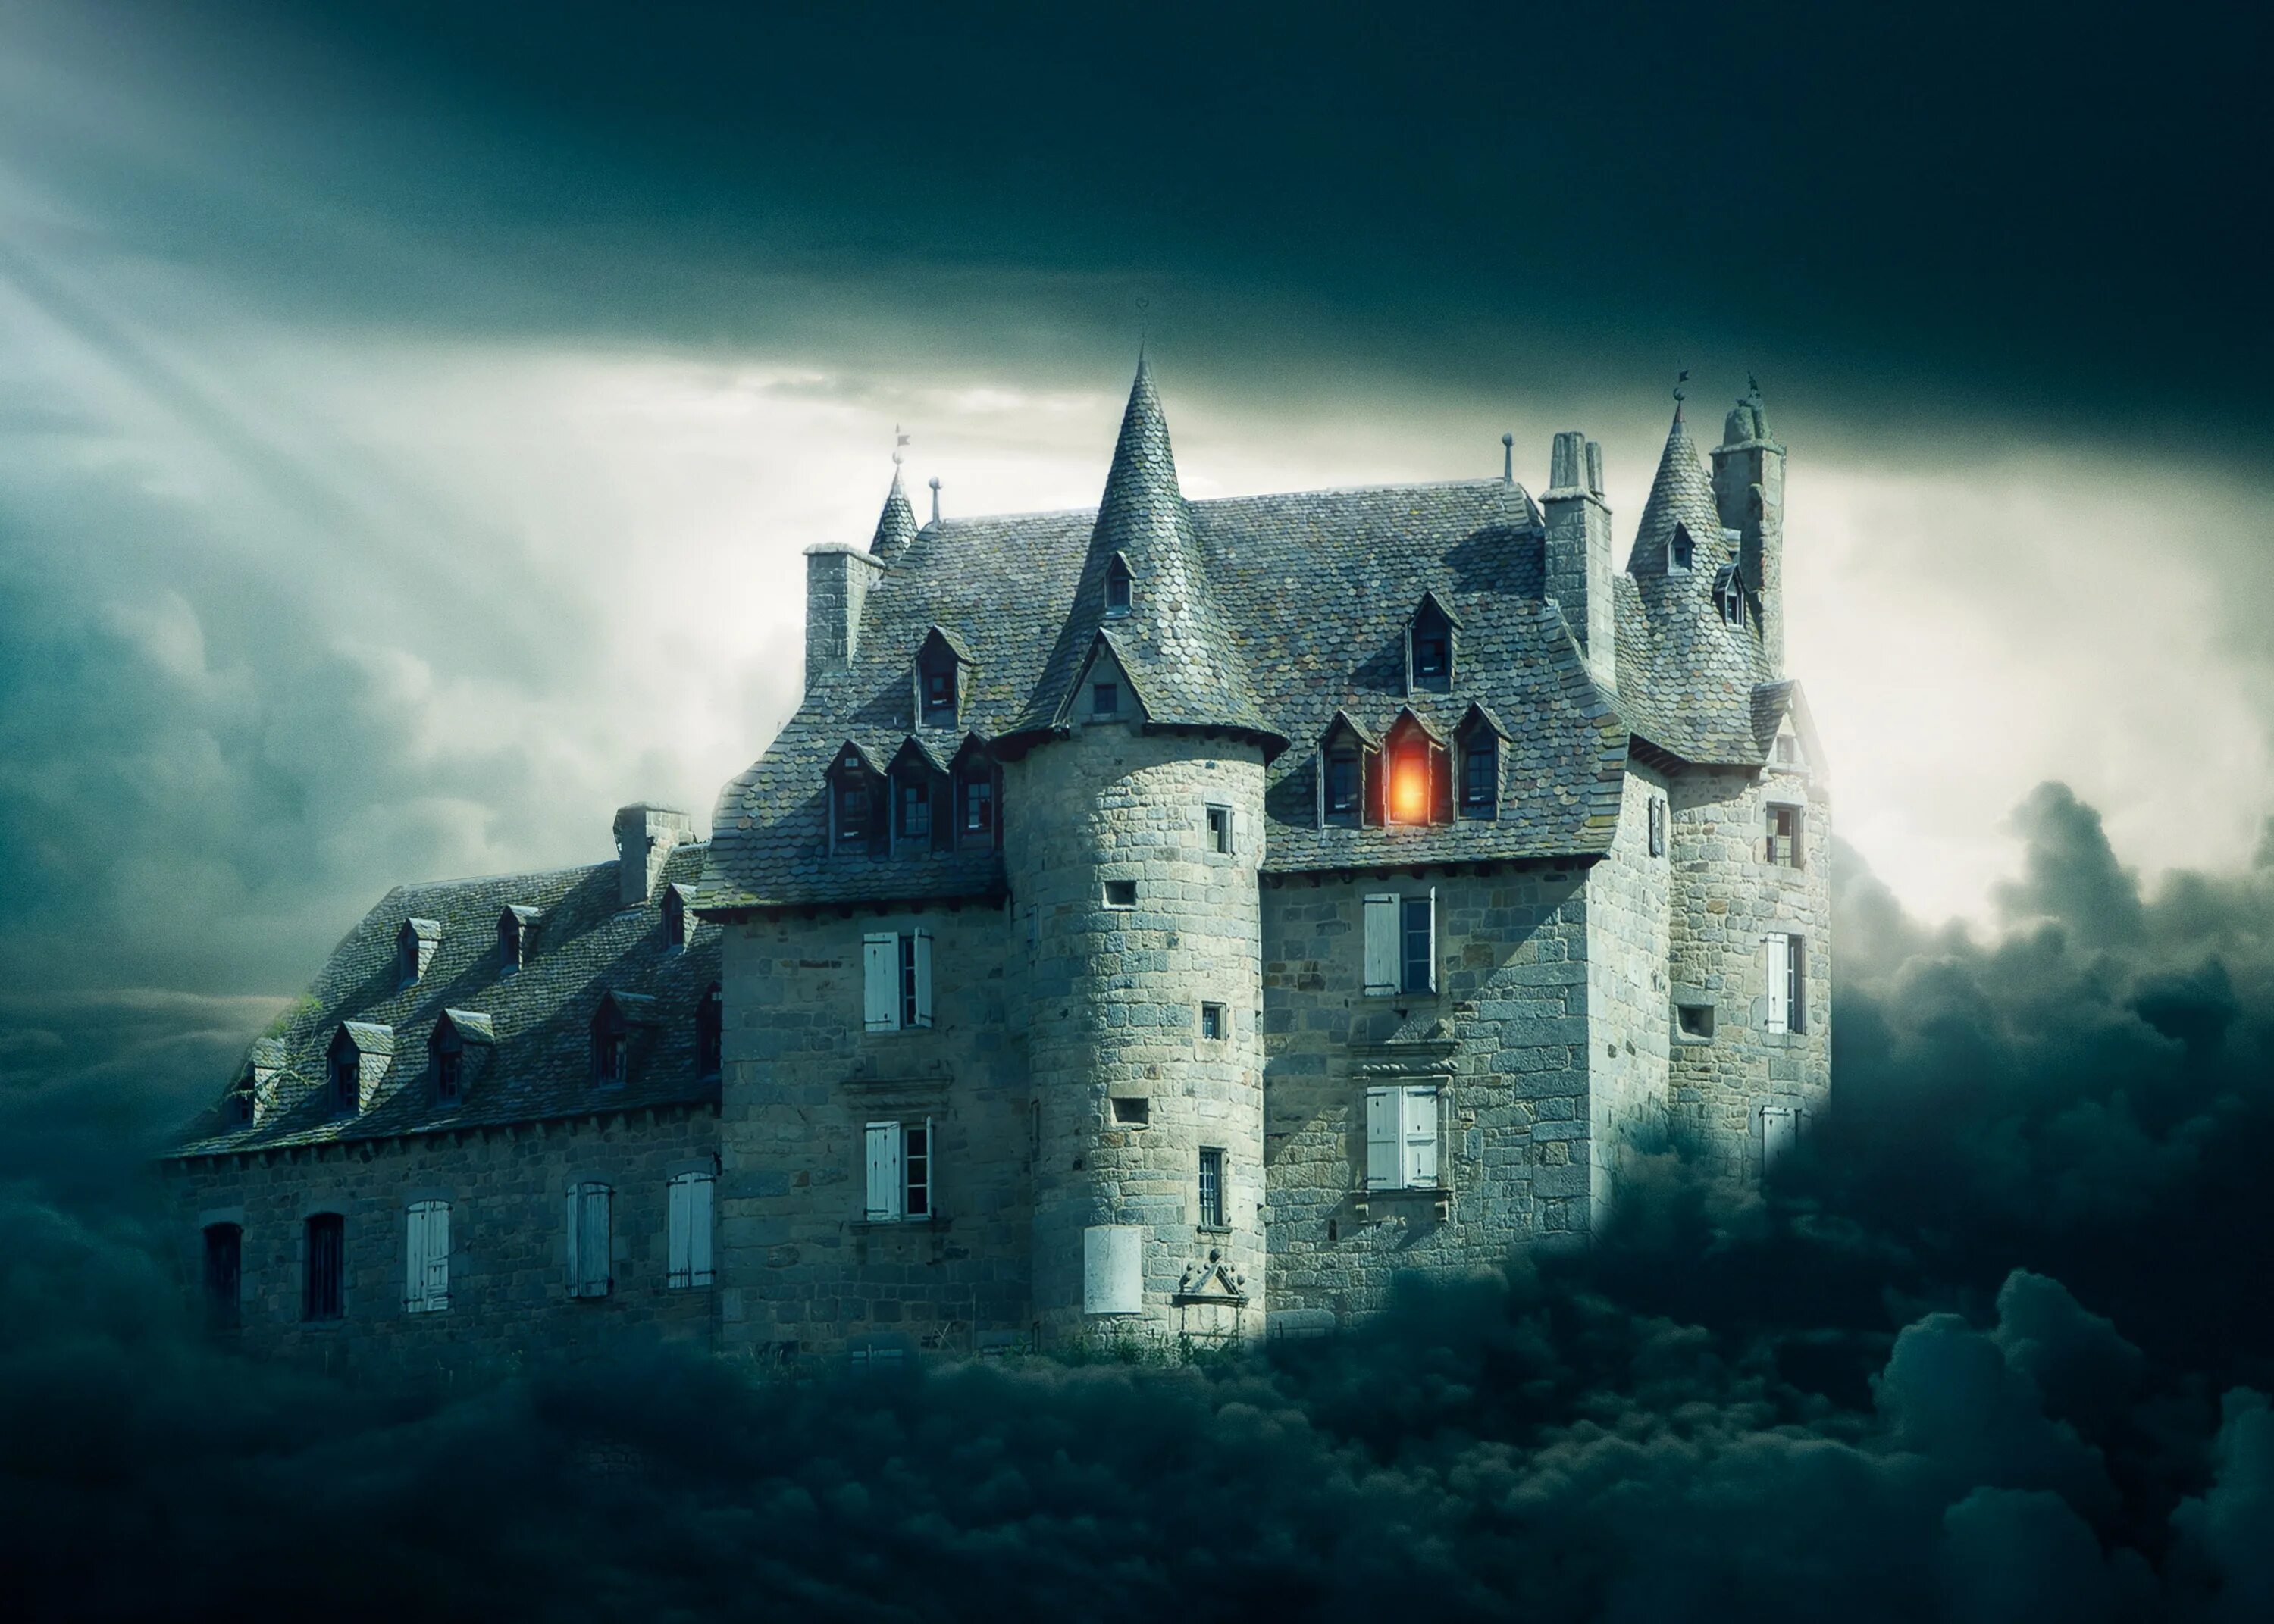 Уолпол замок Отранто. Готические замки Франции. Готическийхамок АО Франции. «Таинственный замок». Загадочный замок